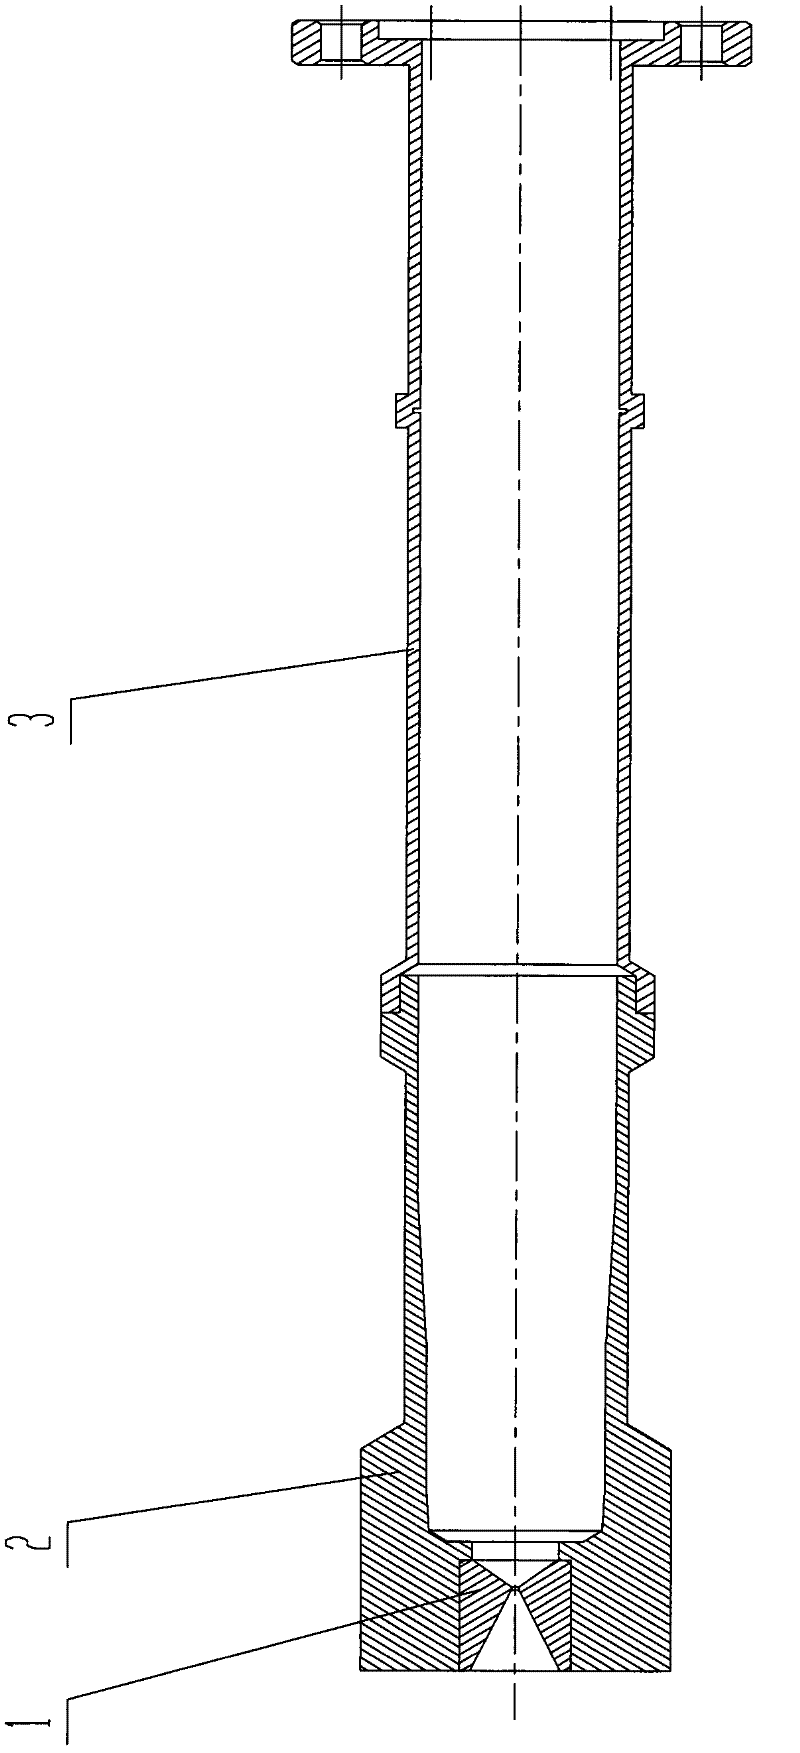 Three-section electric arc heating thrustor